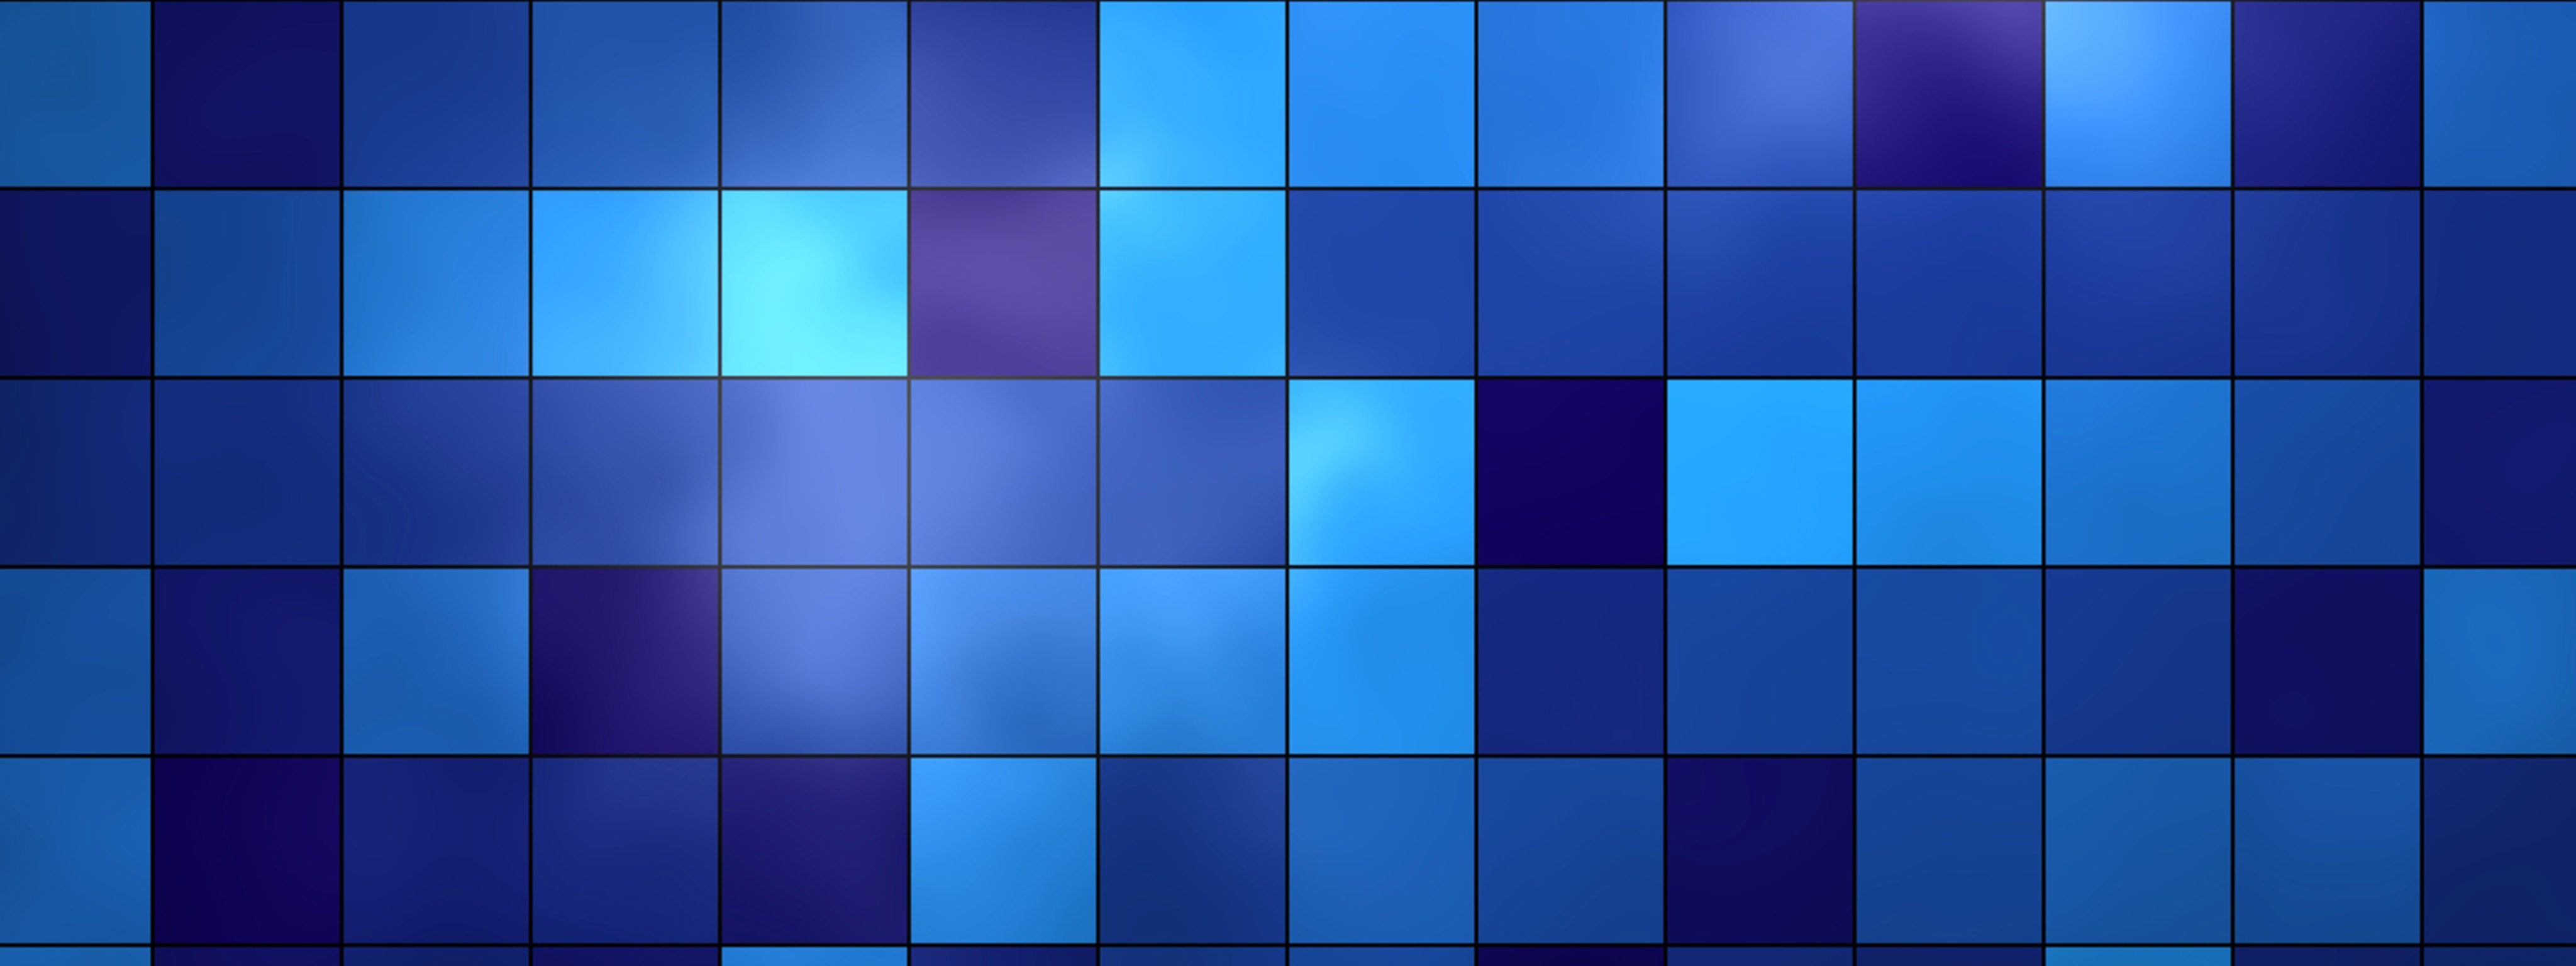 Digital Pixel Graphic - HD Wallpapers Widescreen - 4096x1536